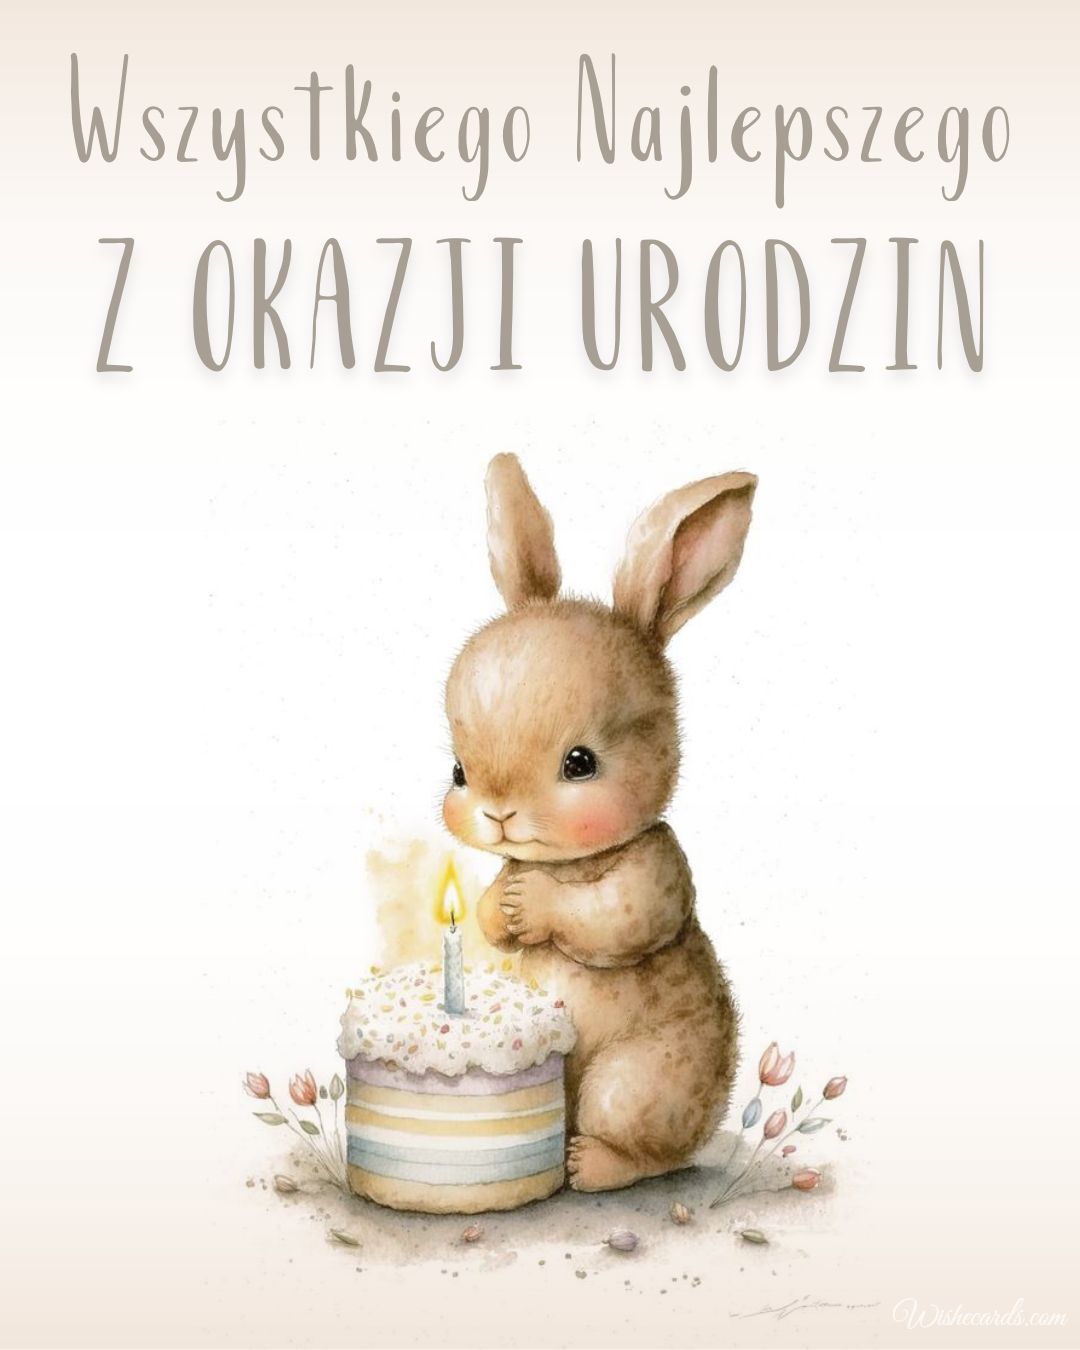 Polish Happy Birthday Image